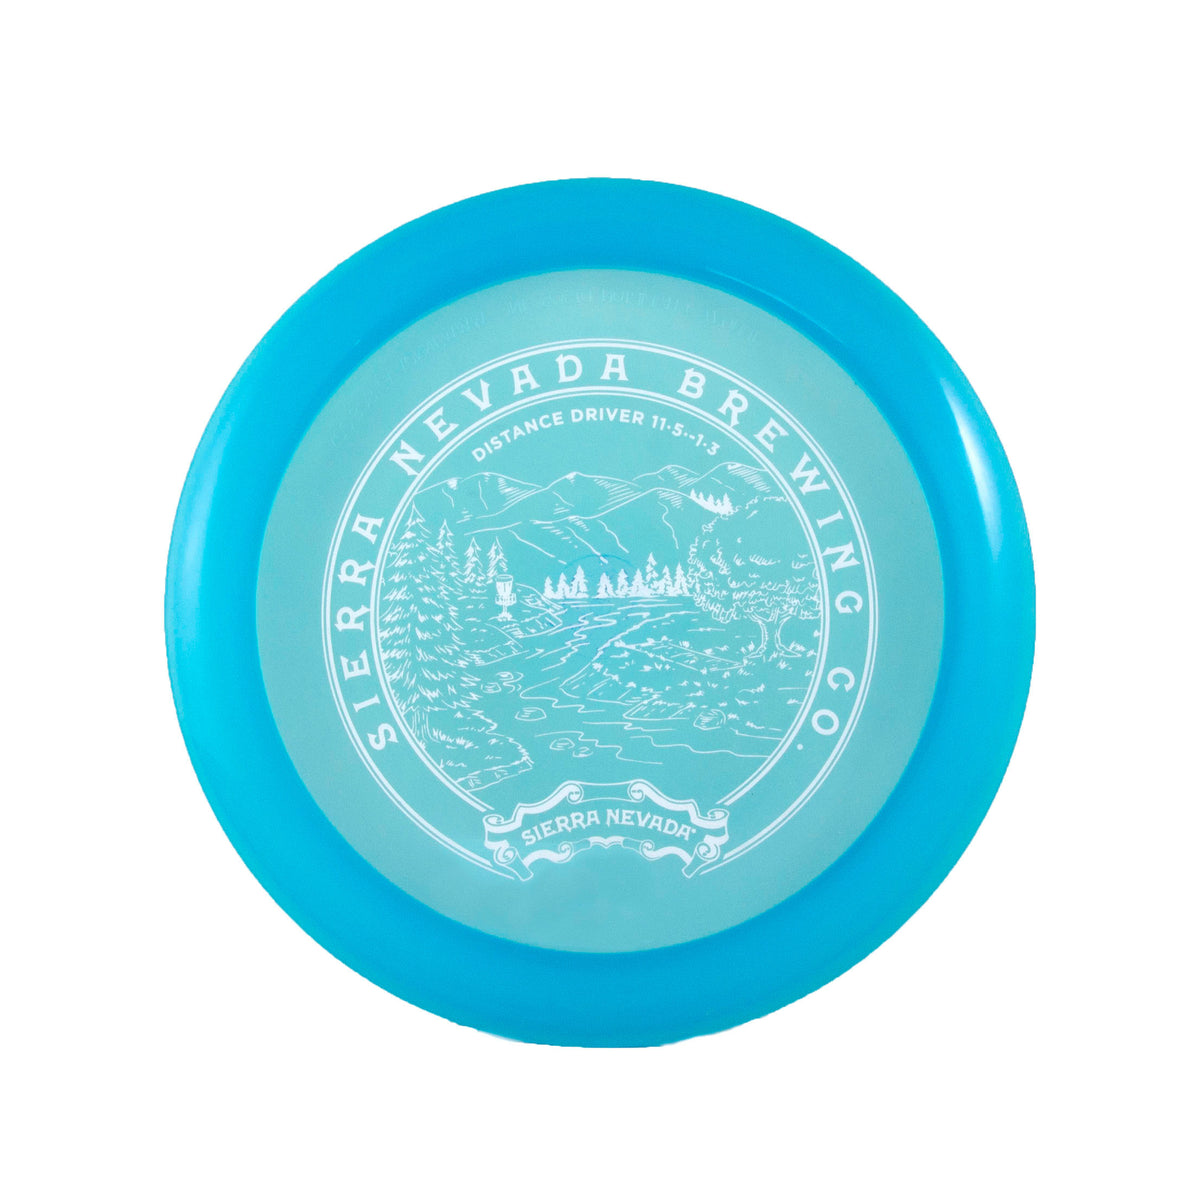 Sierra Nevada disc golf disc - blue